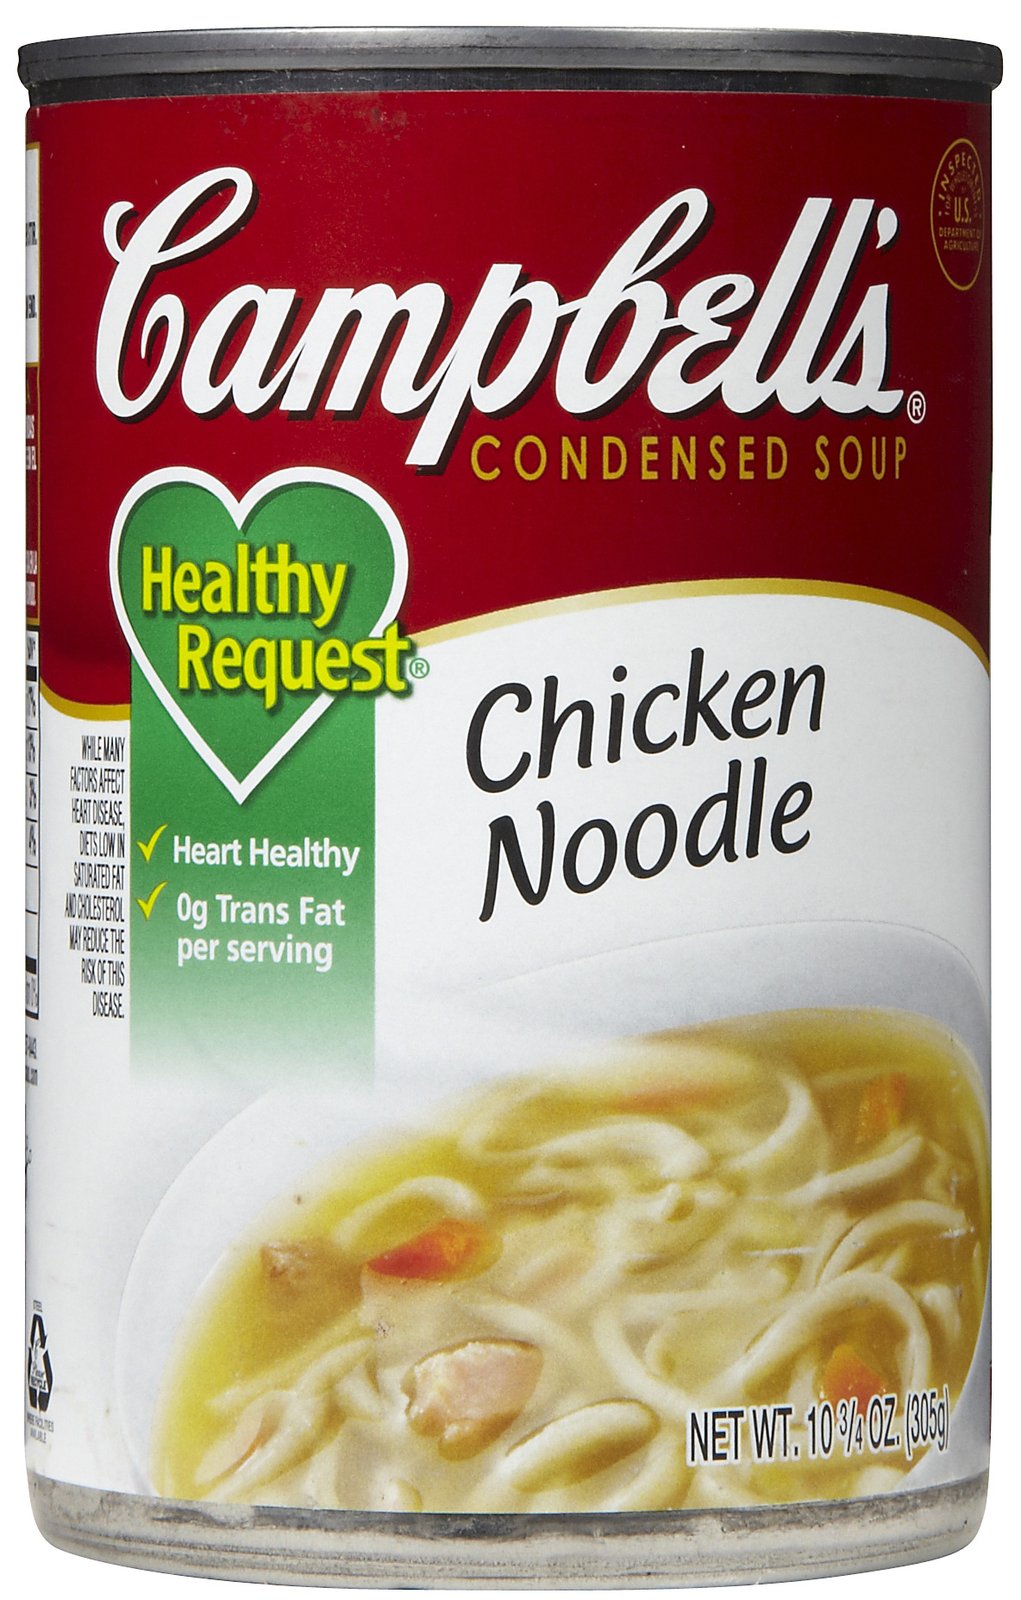 Campbells healthy request chicken noodle